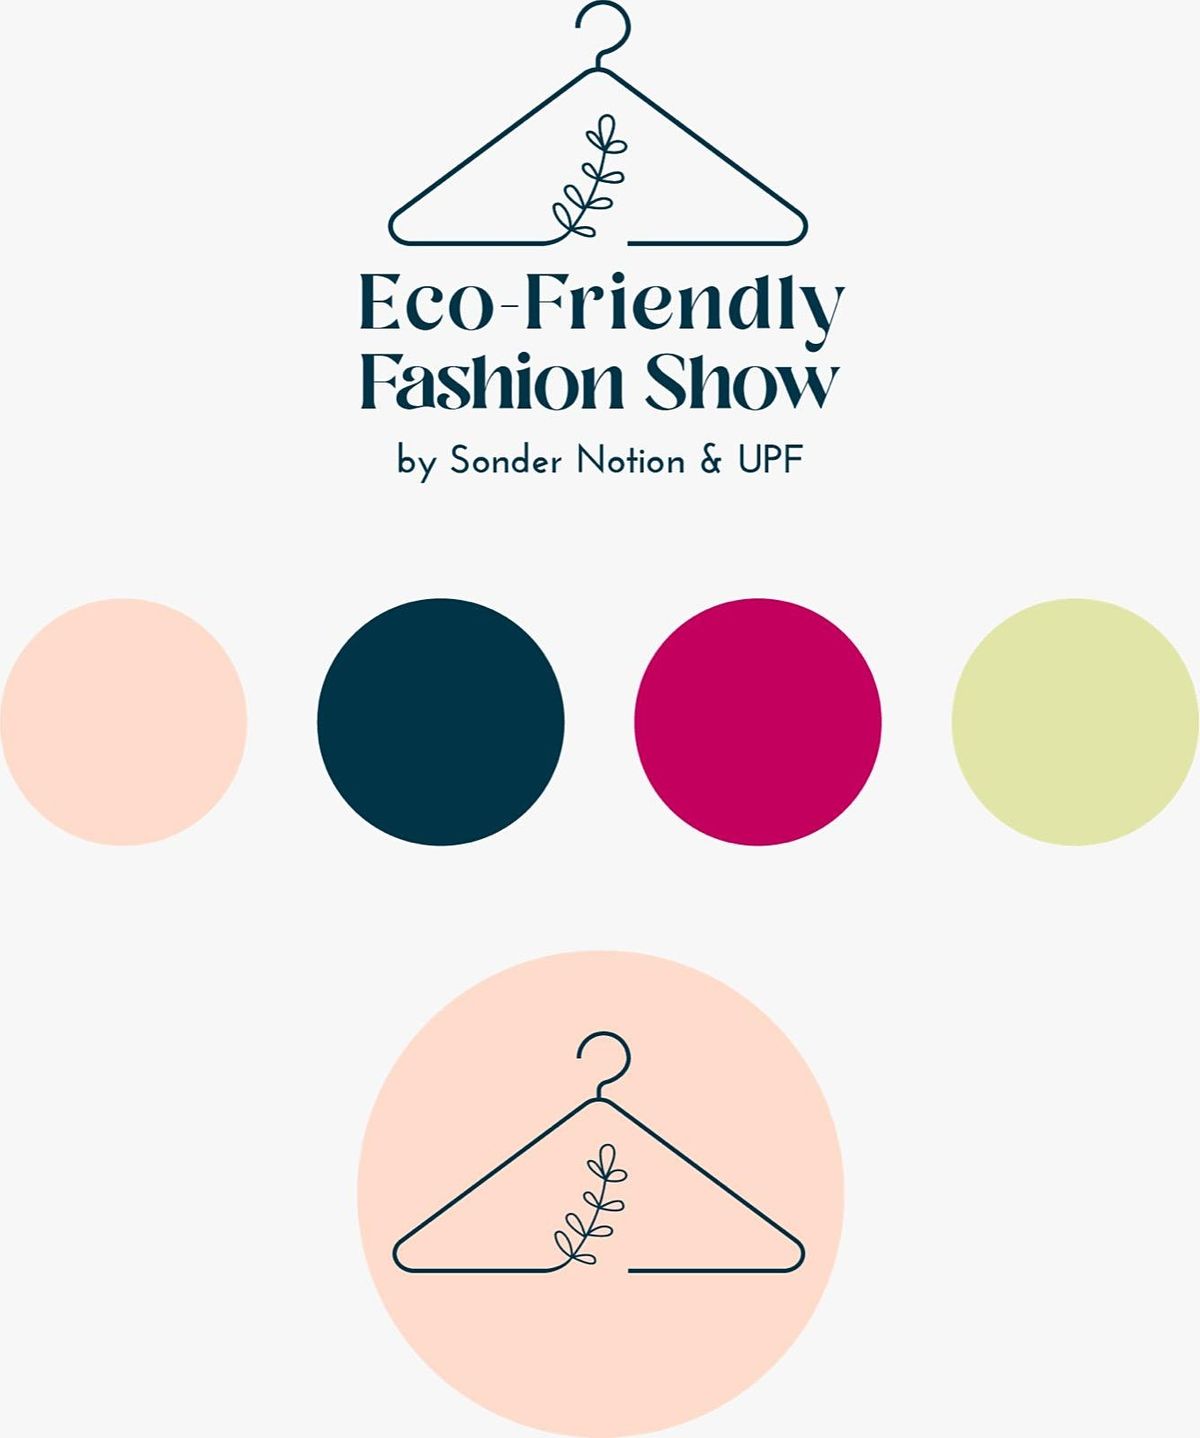 Eco-Friendly Fashion Show by Sonder Notion & UPF